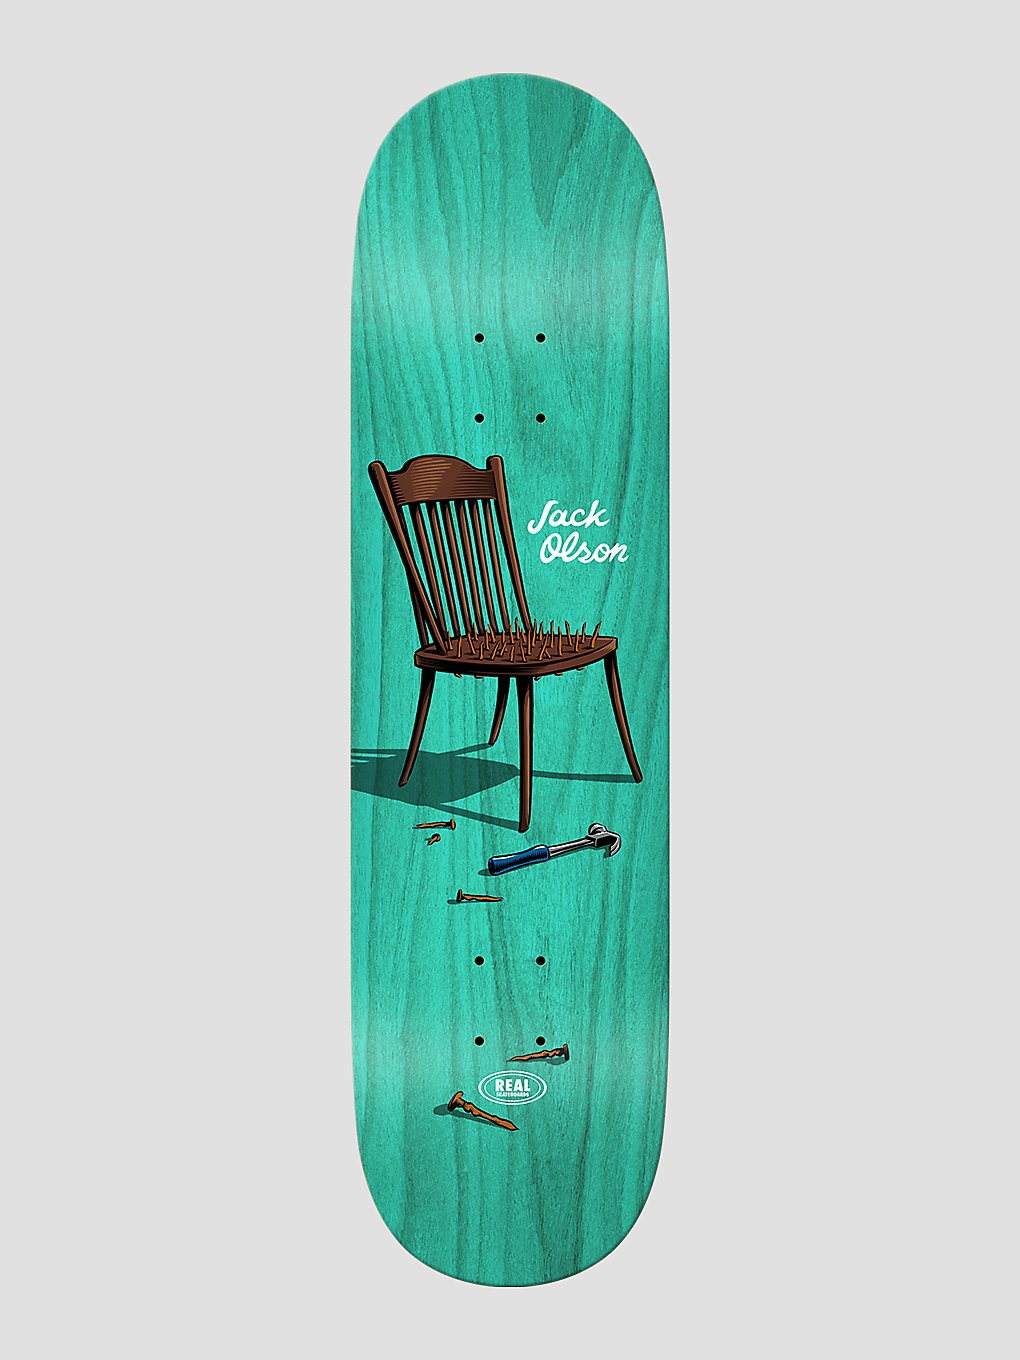 Real Jack Jackupuncture Full SE 8.25" Skateboard Deck turquoise kaufen